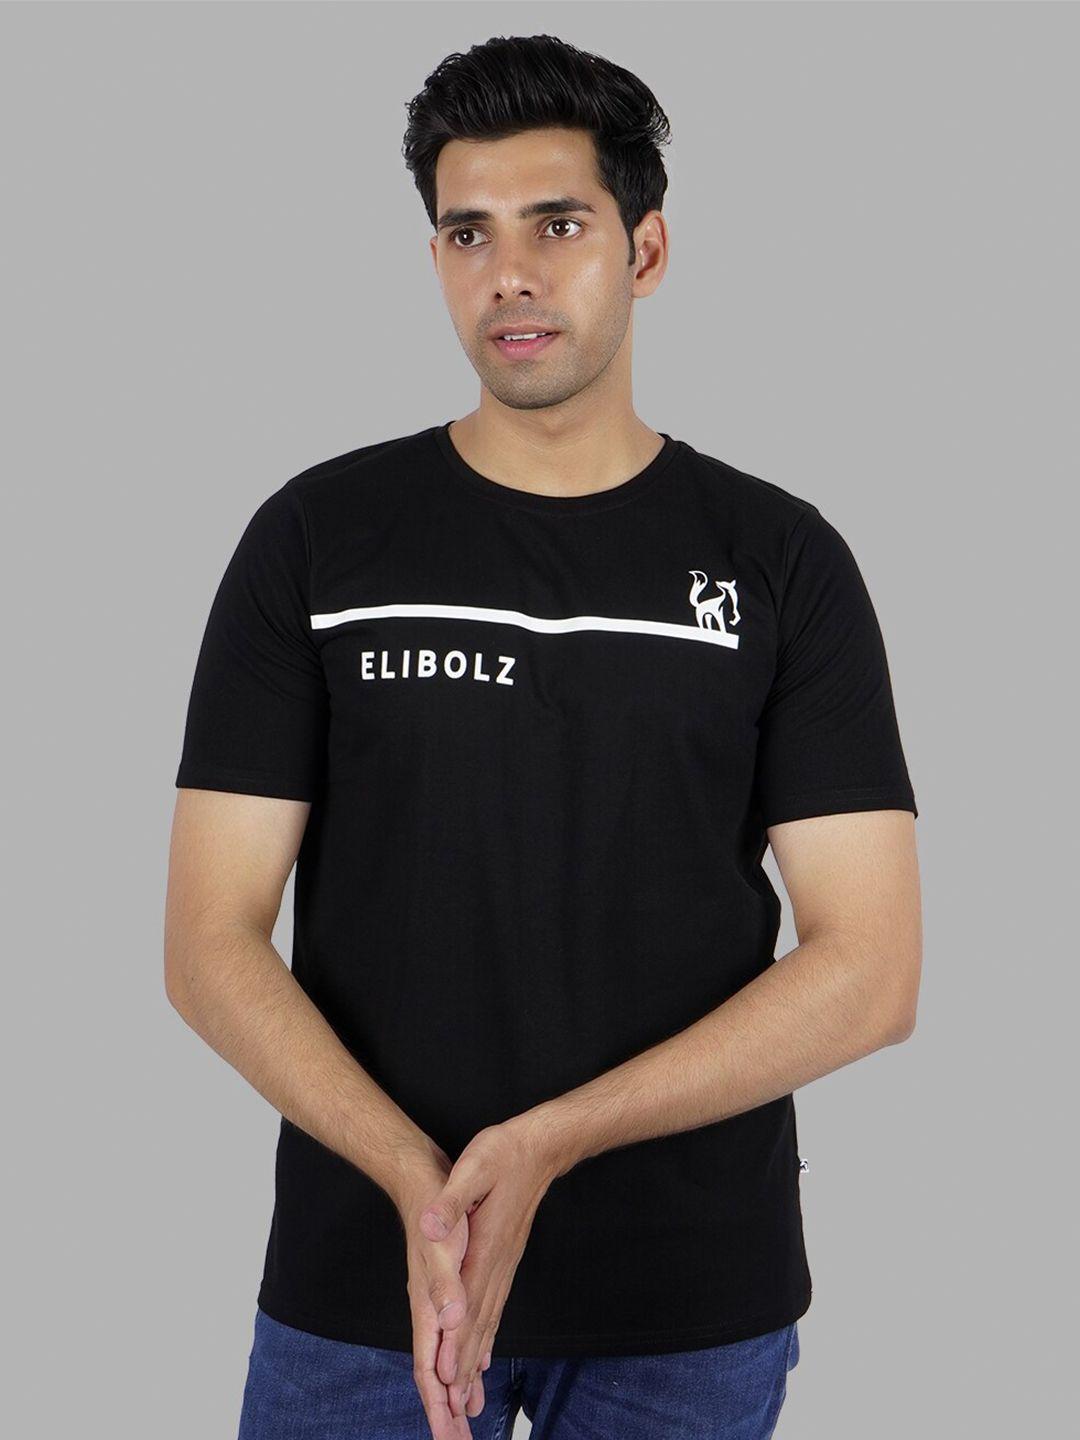 elibolz typography printed round neck cotton t-shirt